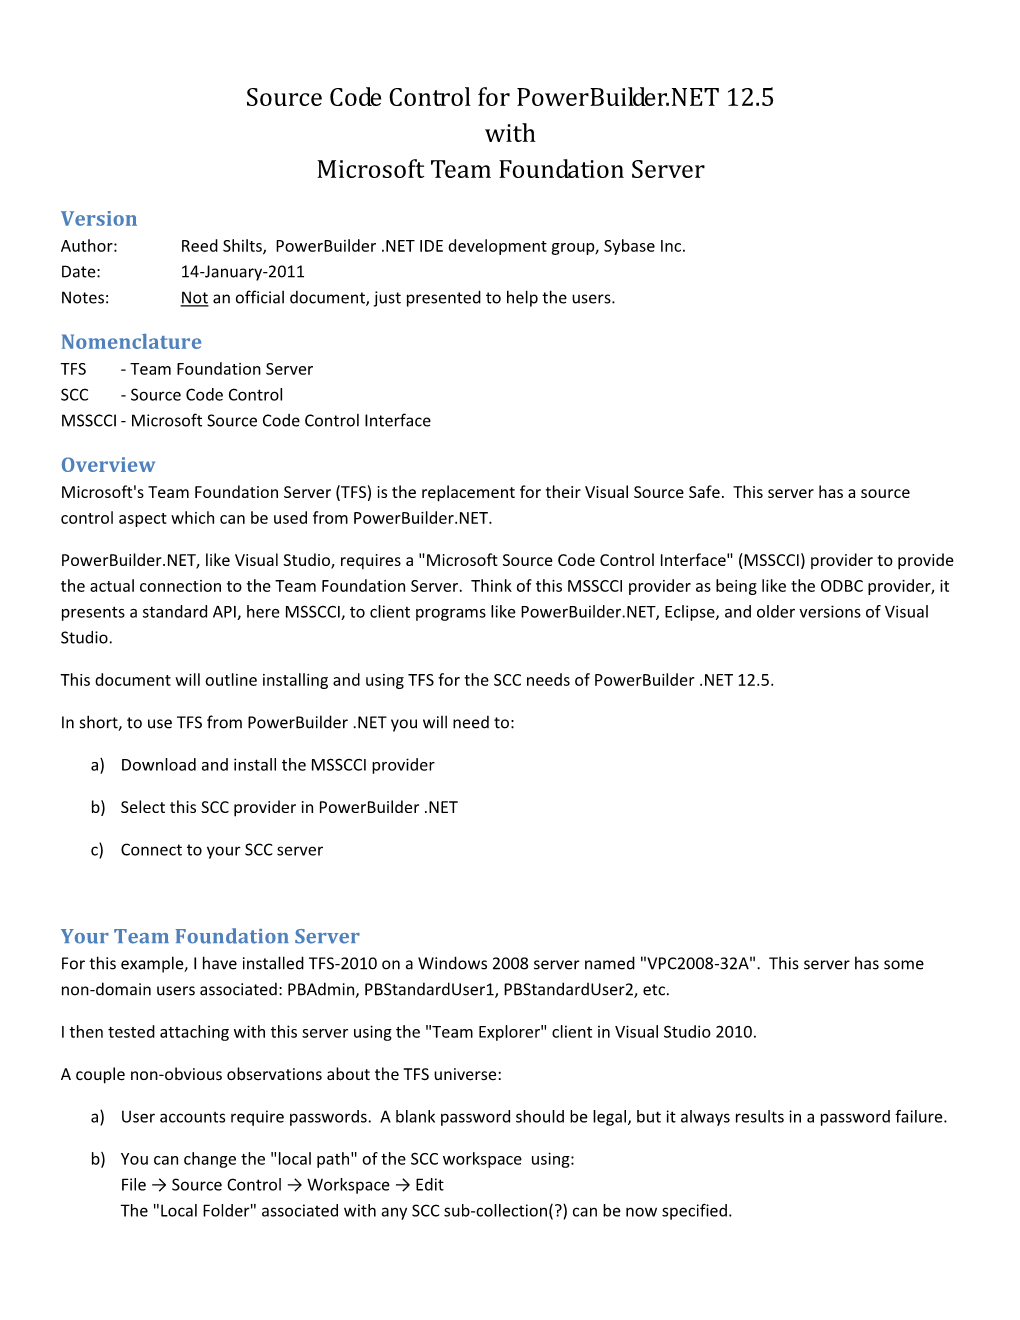 Source Code Control for Powerbuilder.NET 12.5 with Microsoft Team Foundation Server